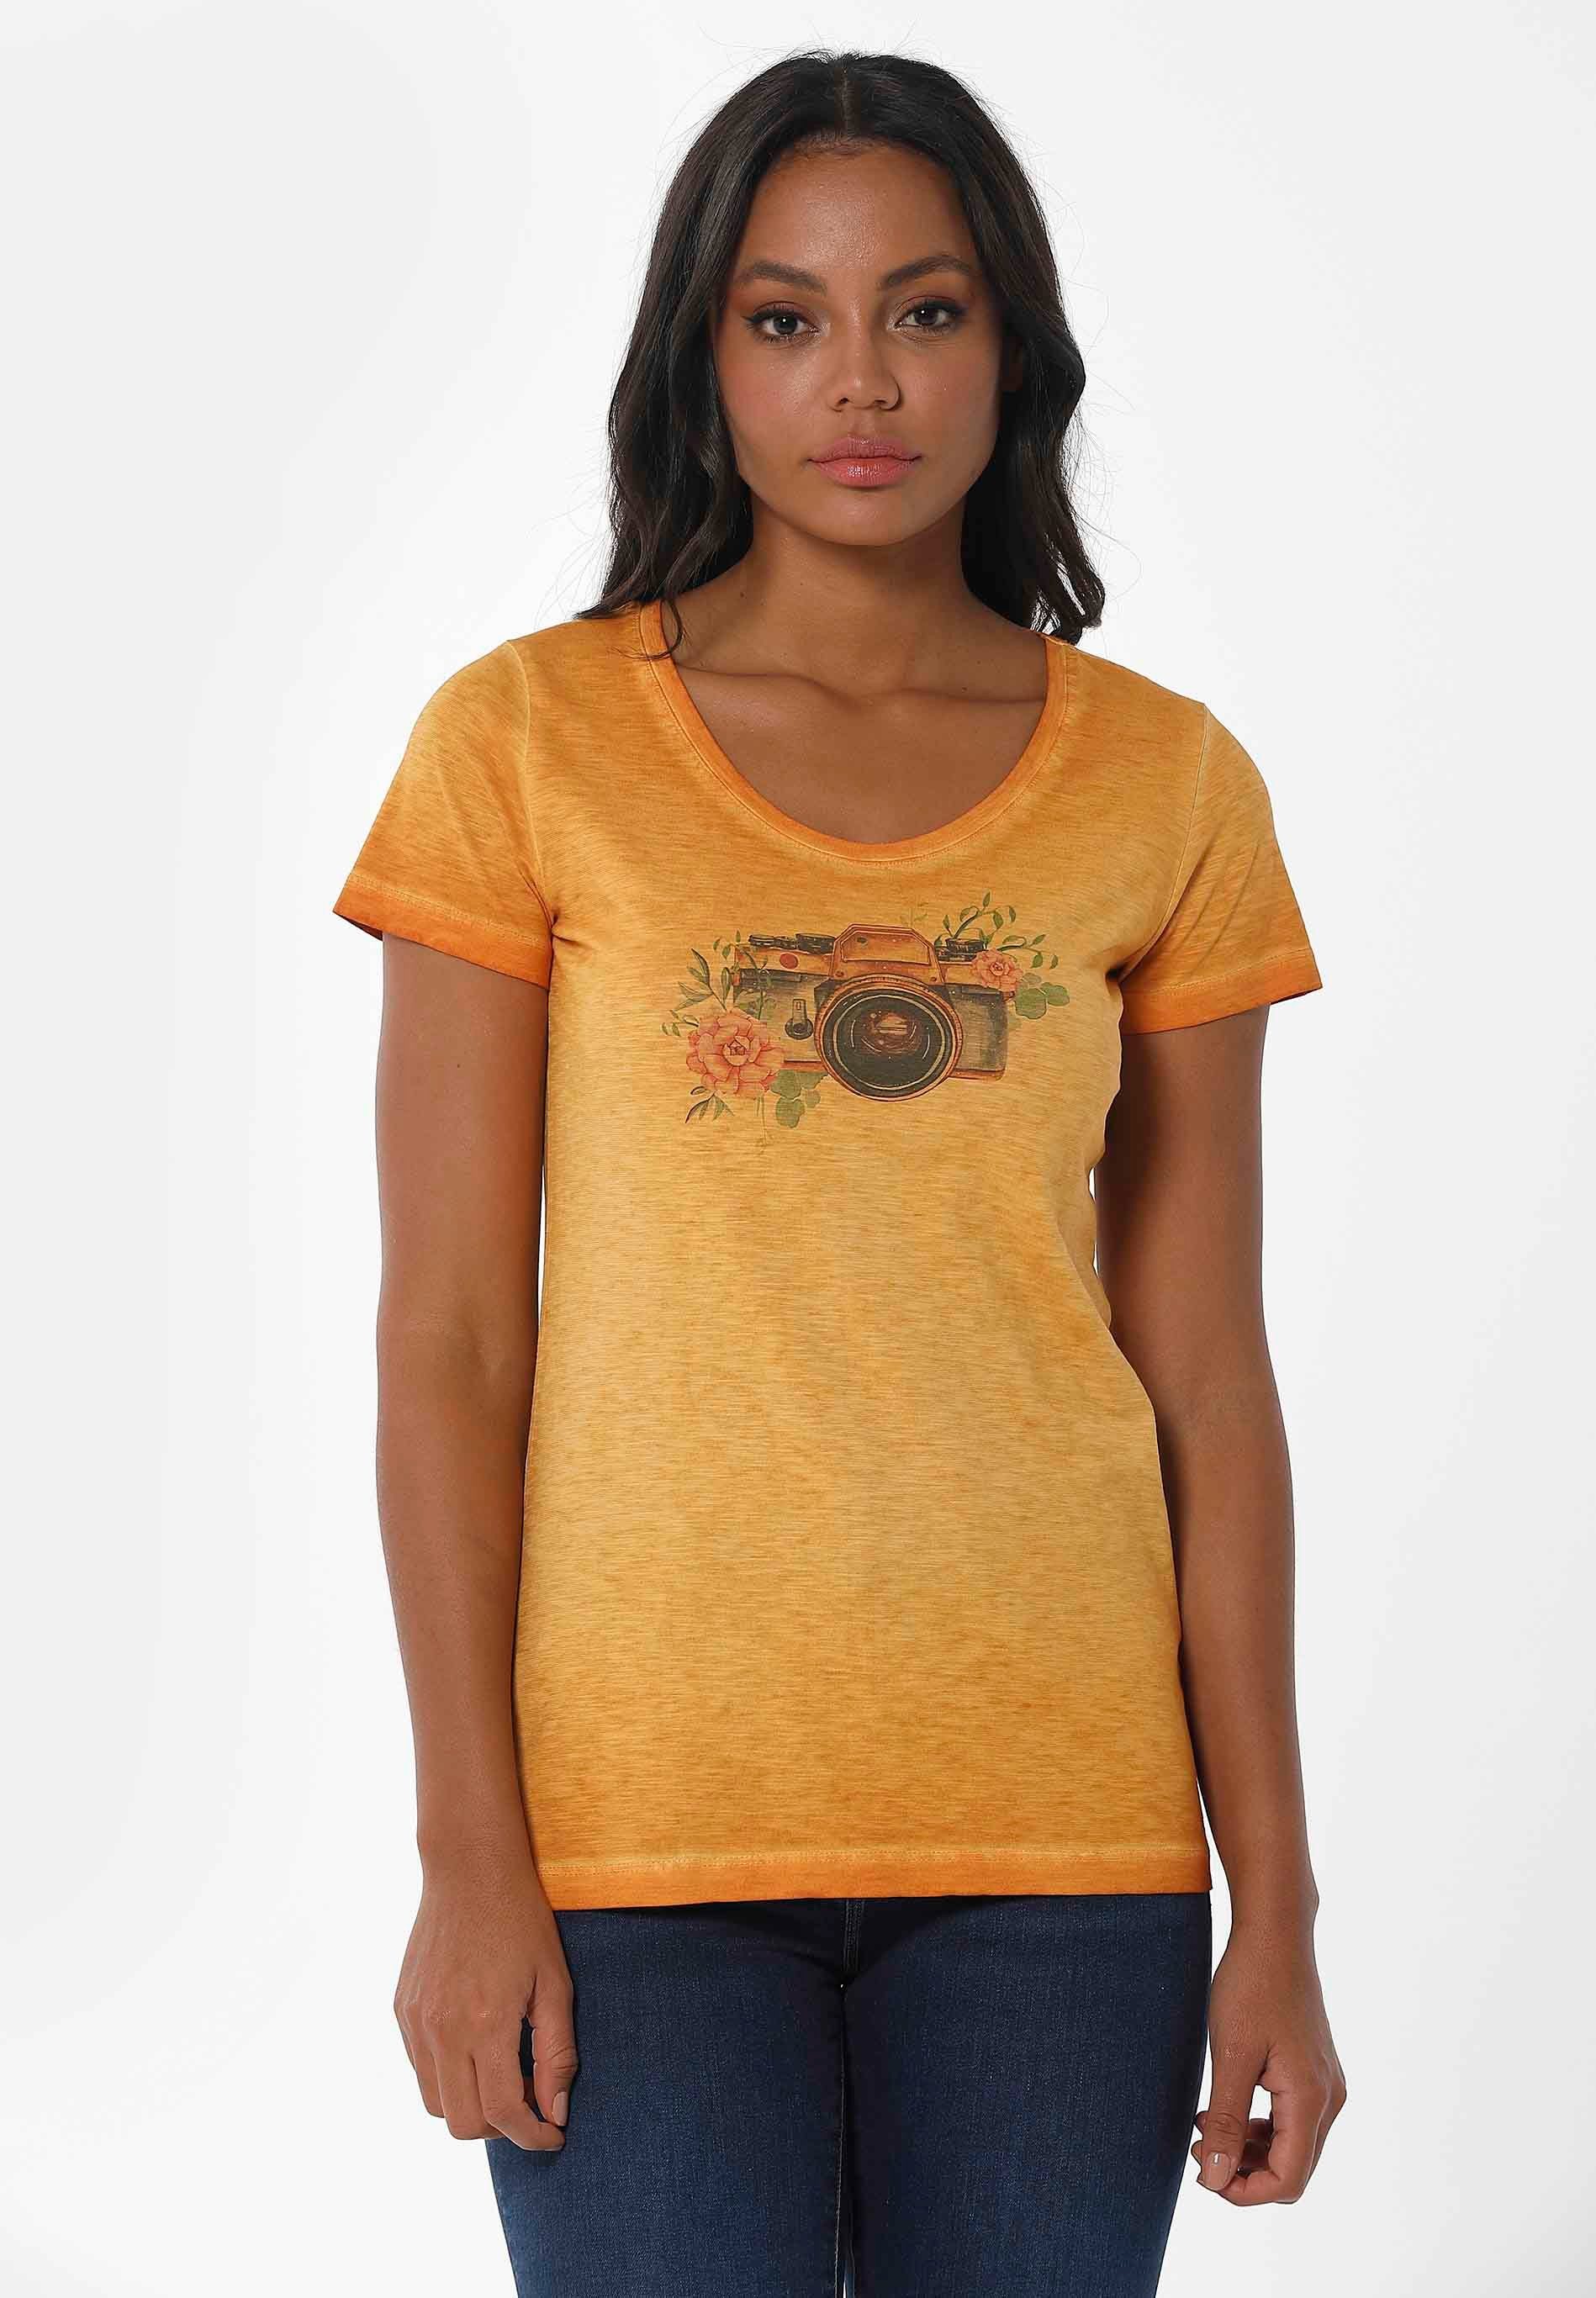 ORGANICATION T-Shirt Women's Garment-Dyed Printed T-shirt in Mango